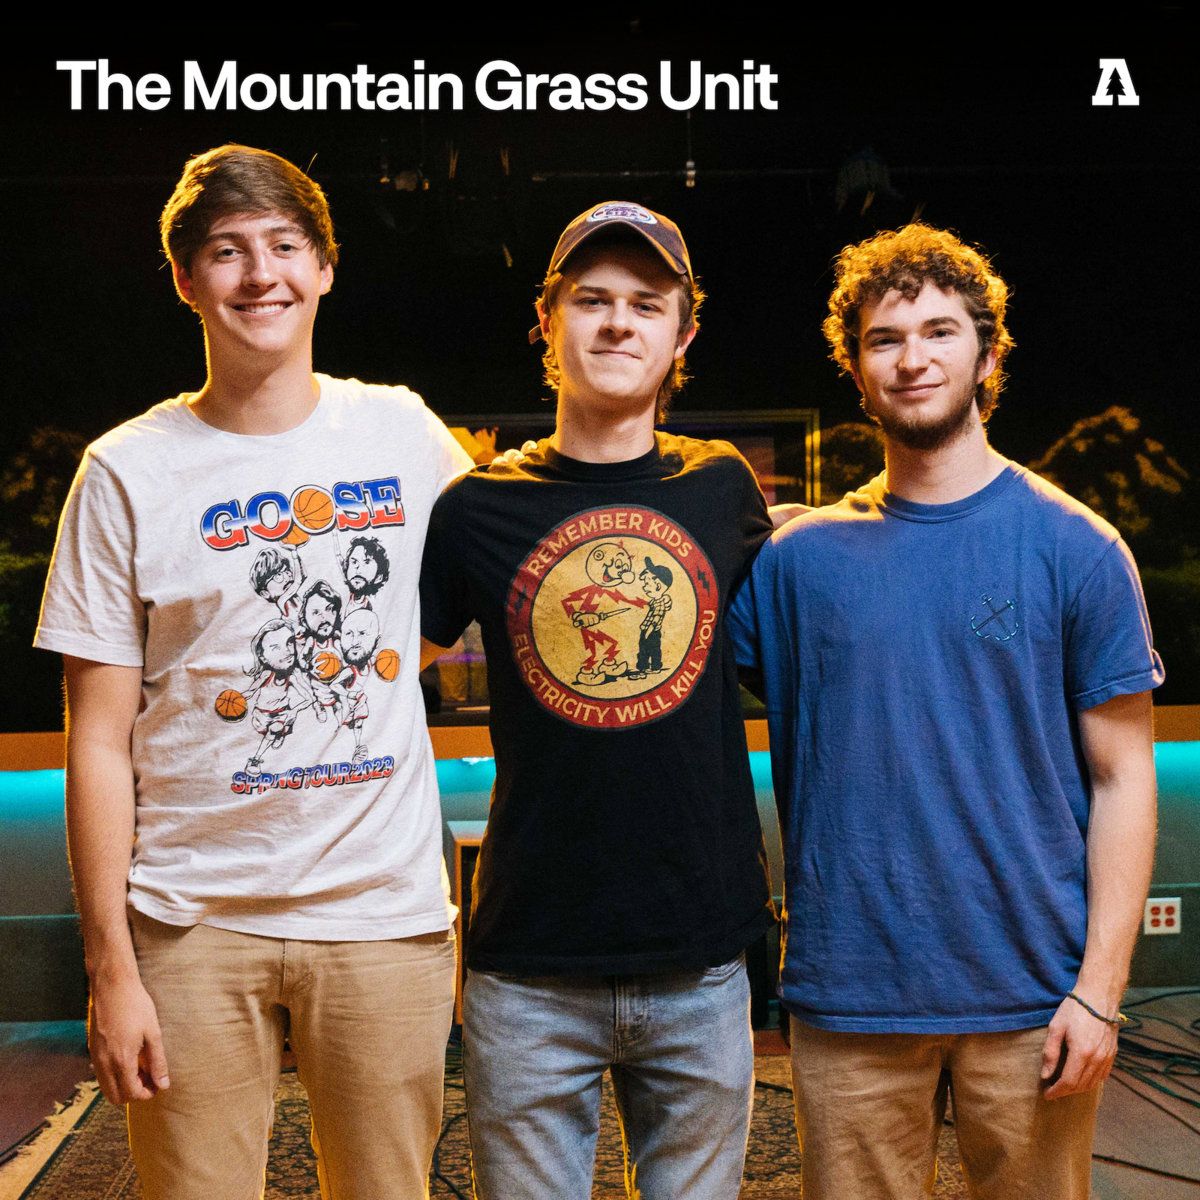 The Mountain Grass Unit